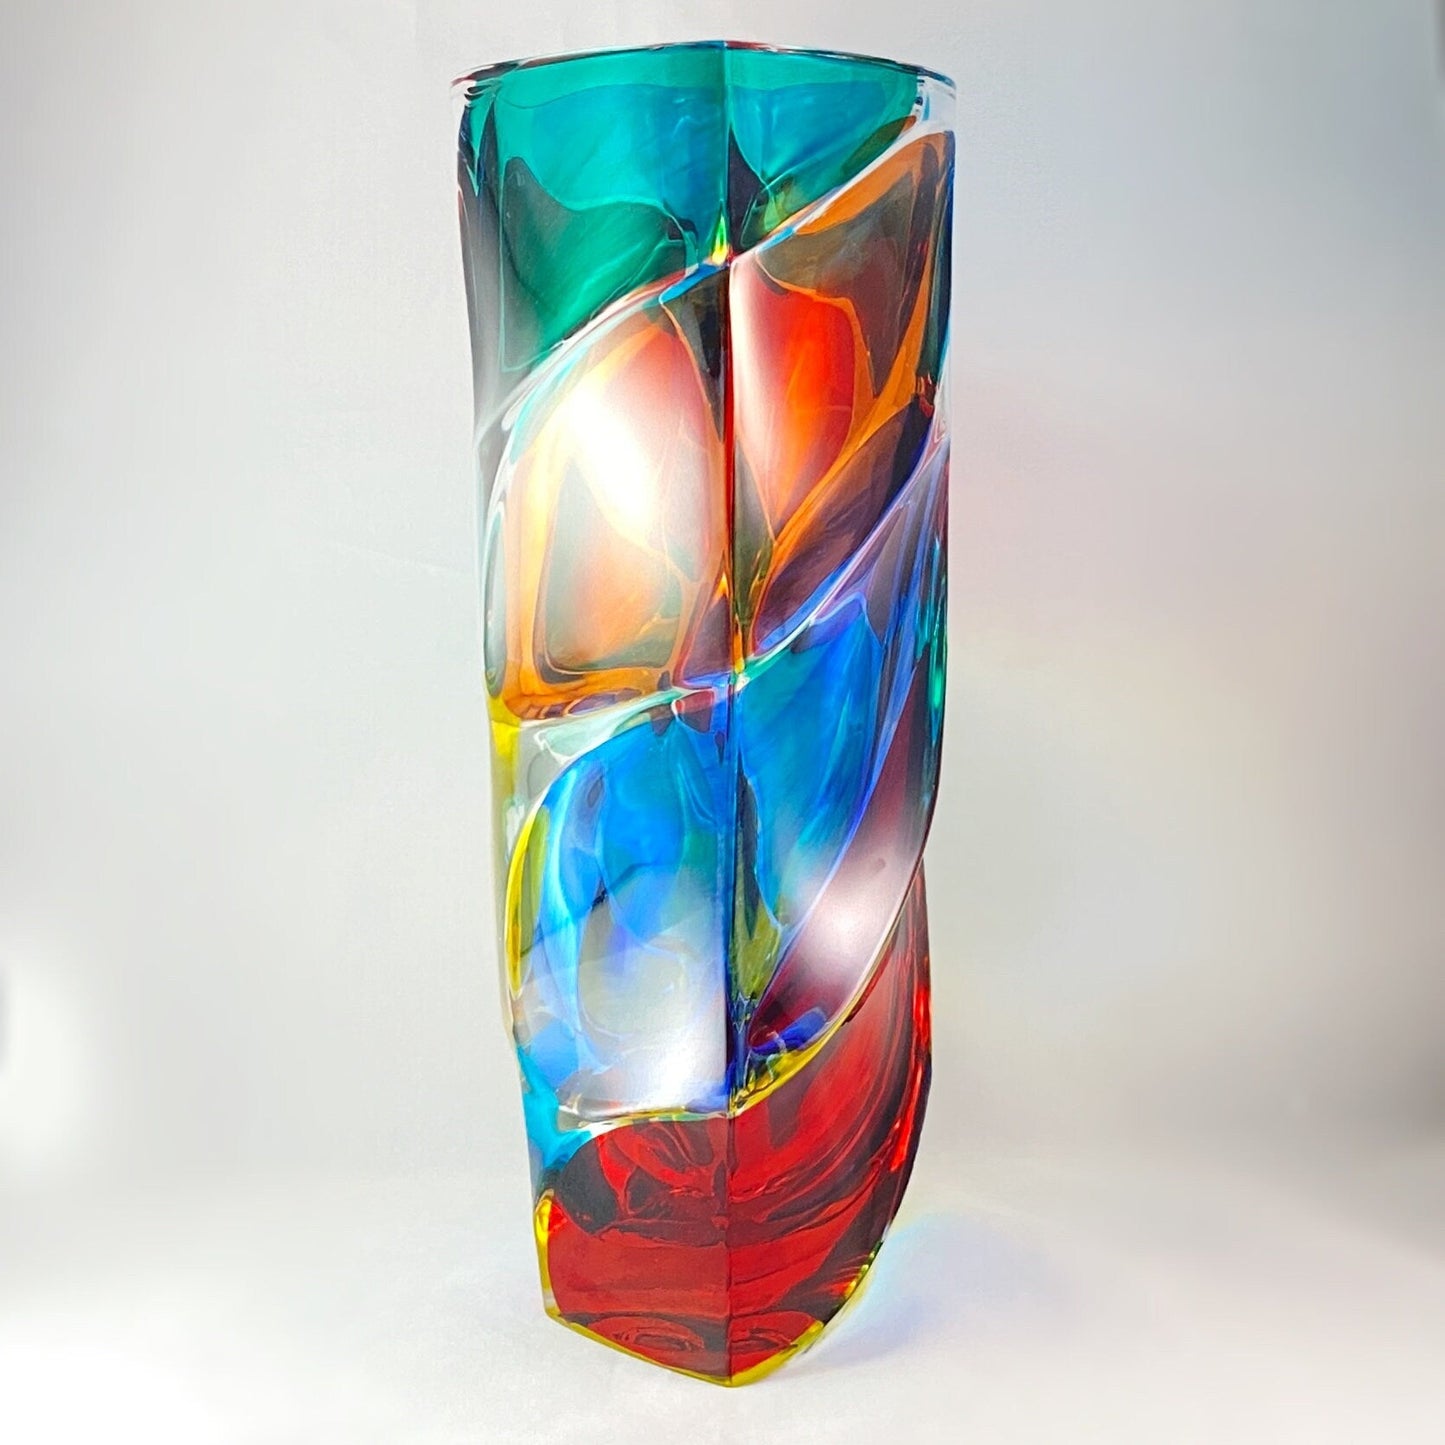 Venetian Glass Calypso Vase - Handmade in Italy, Colorful Murano Glass